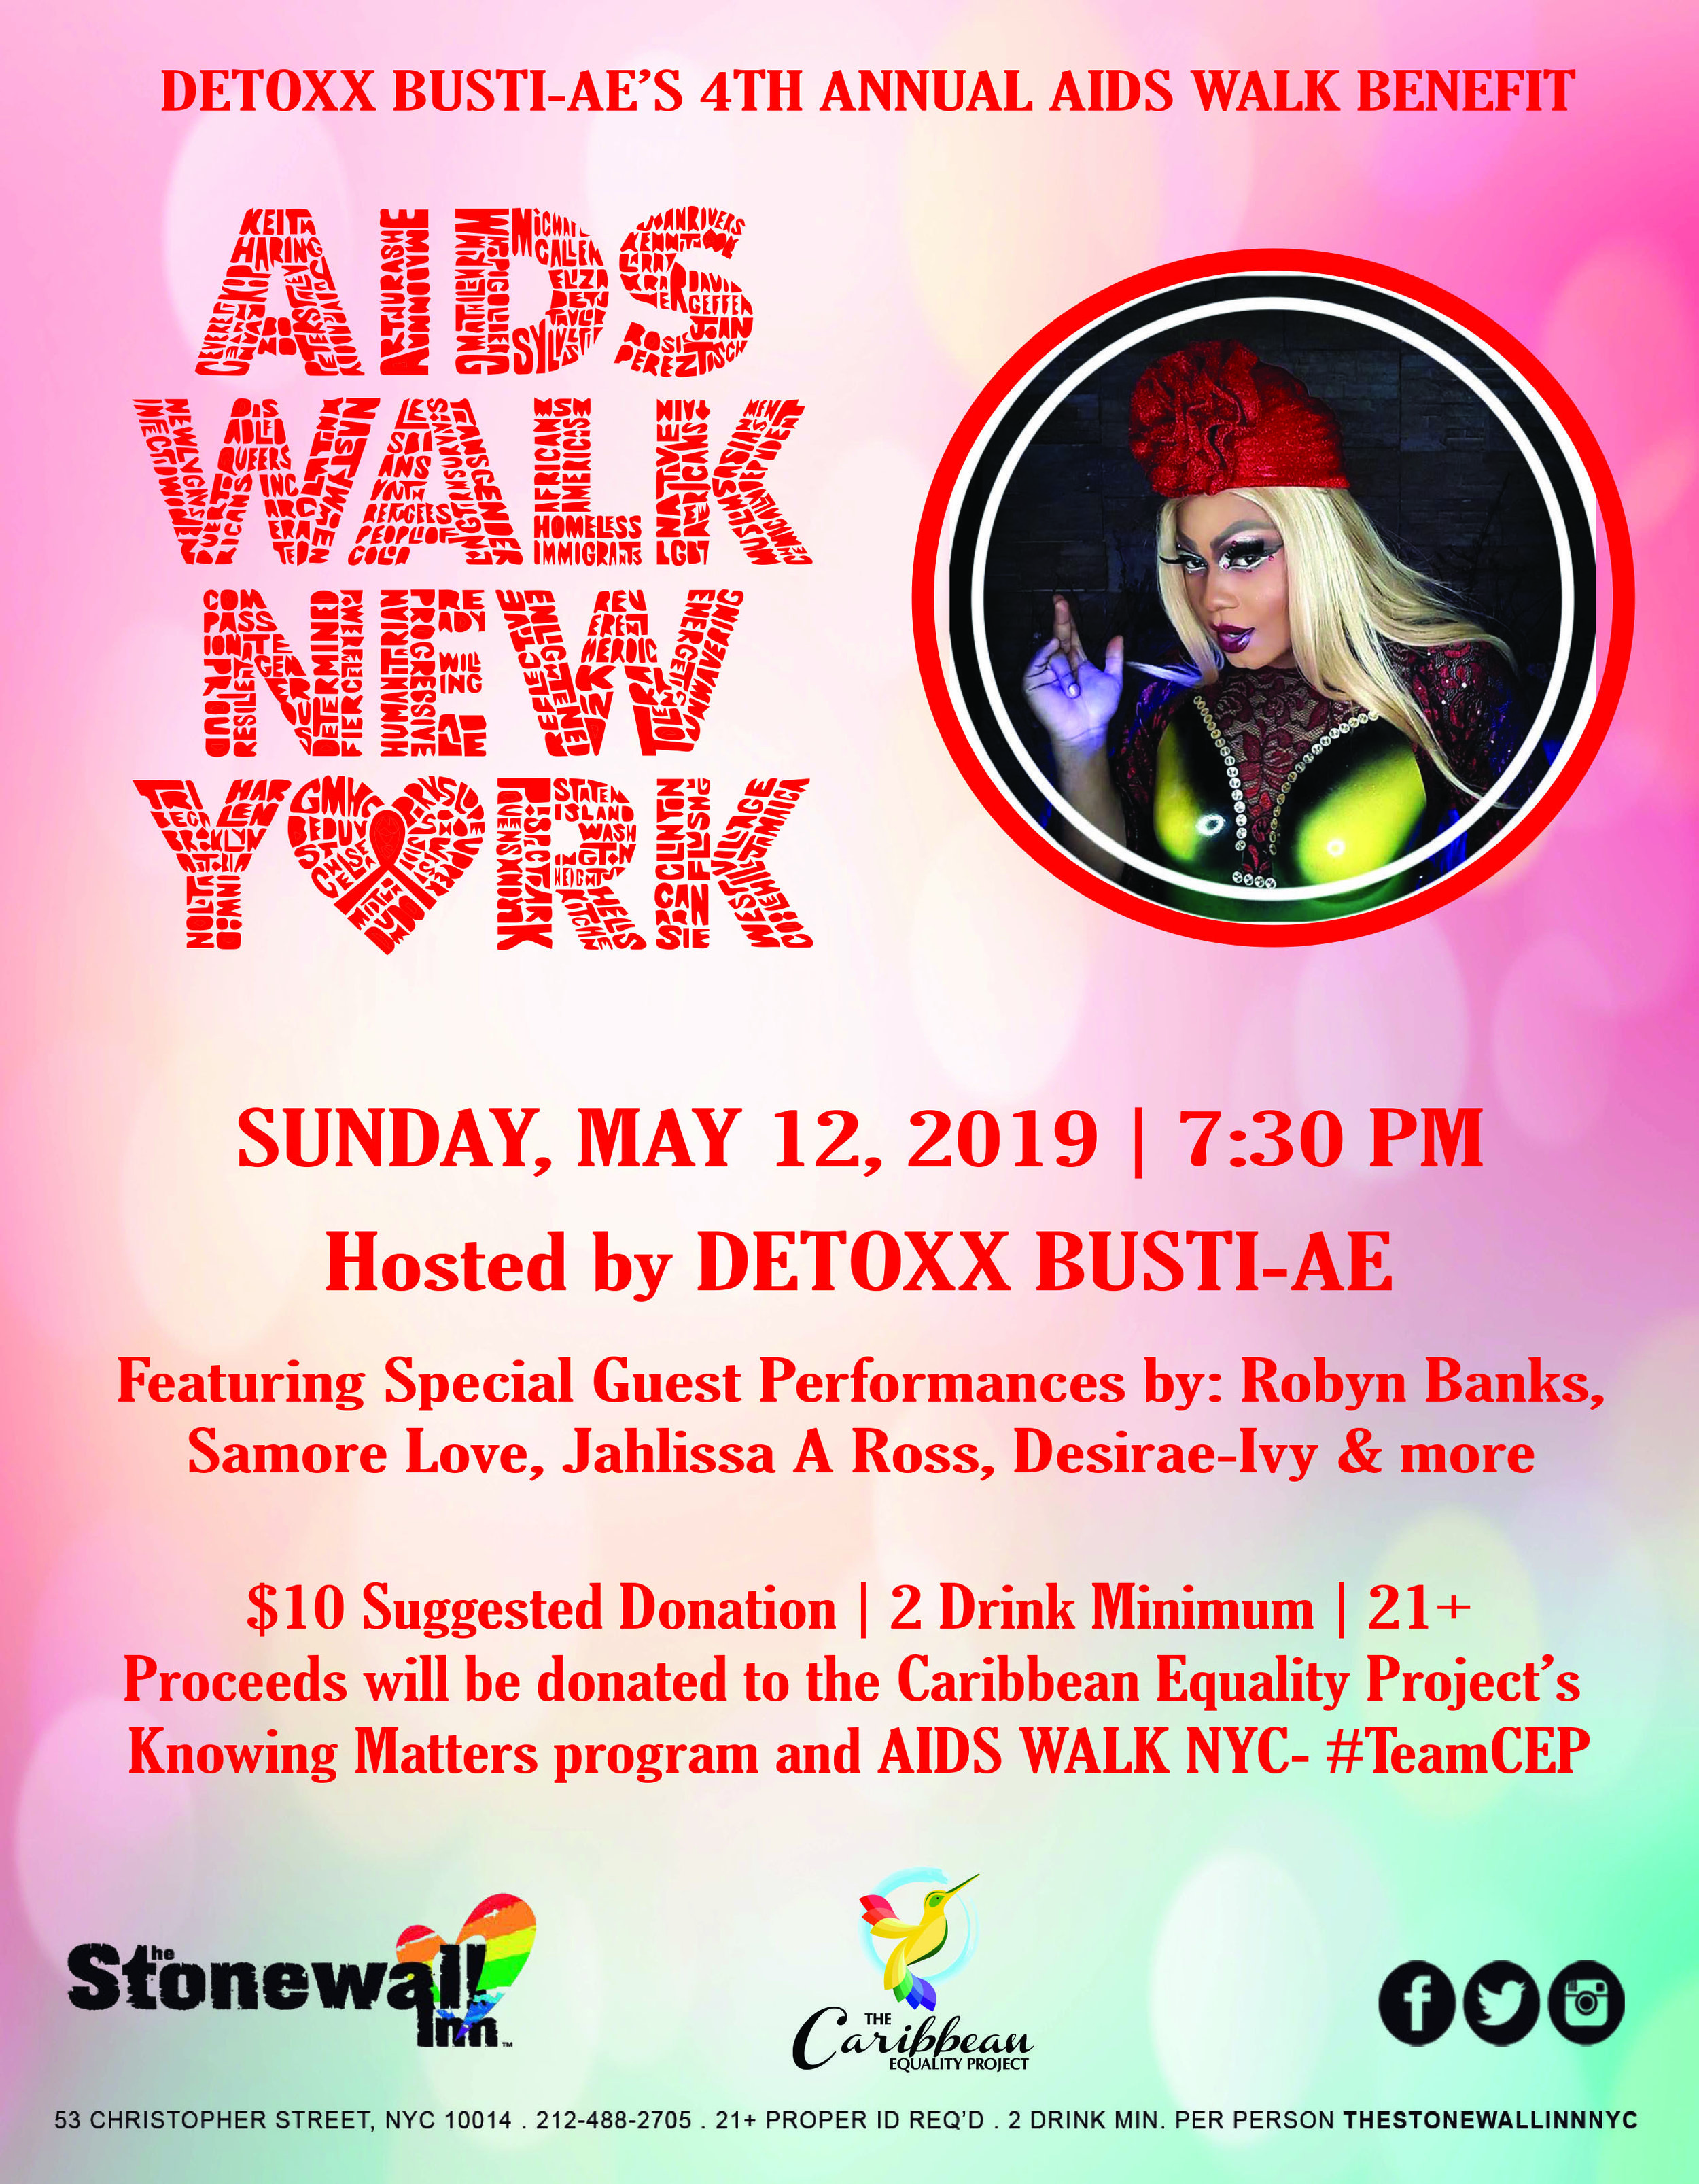 Detoxx Bsti-ae's 4th Annual AIDS Walk NY Benefit